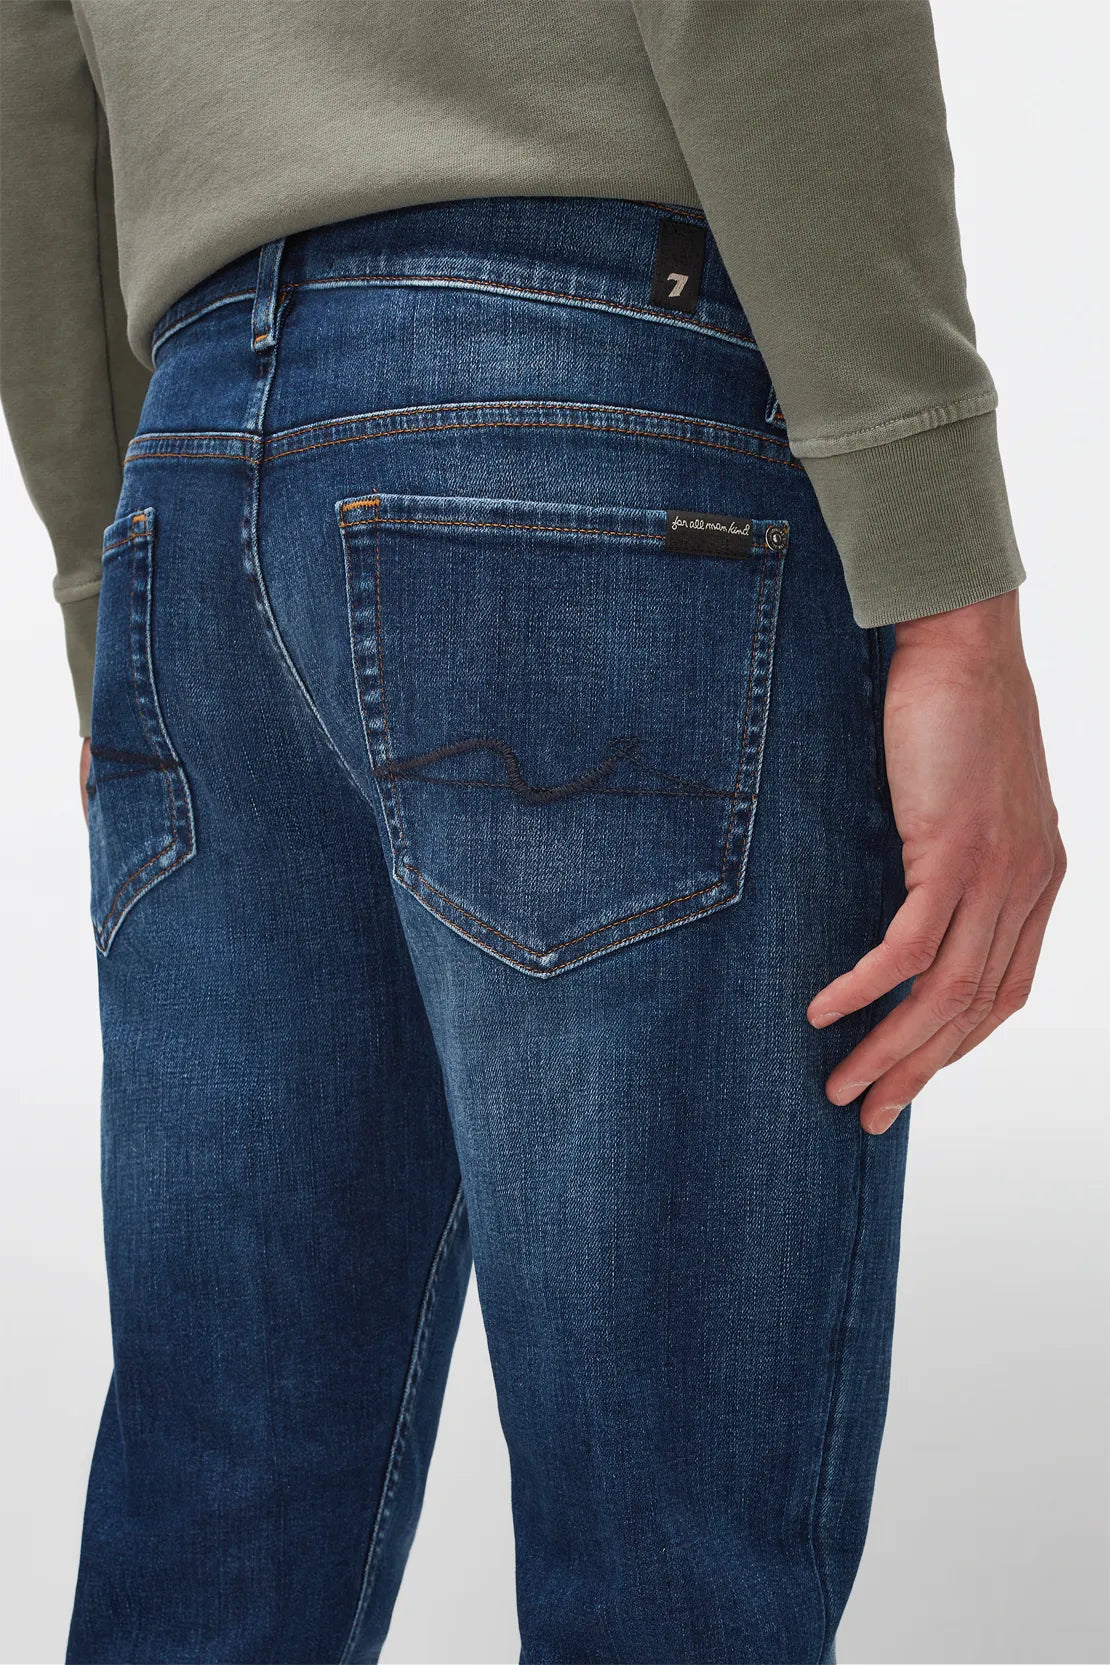 Paxtyn Tapered Stretch Essential Skinny Jean